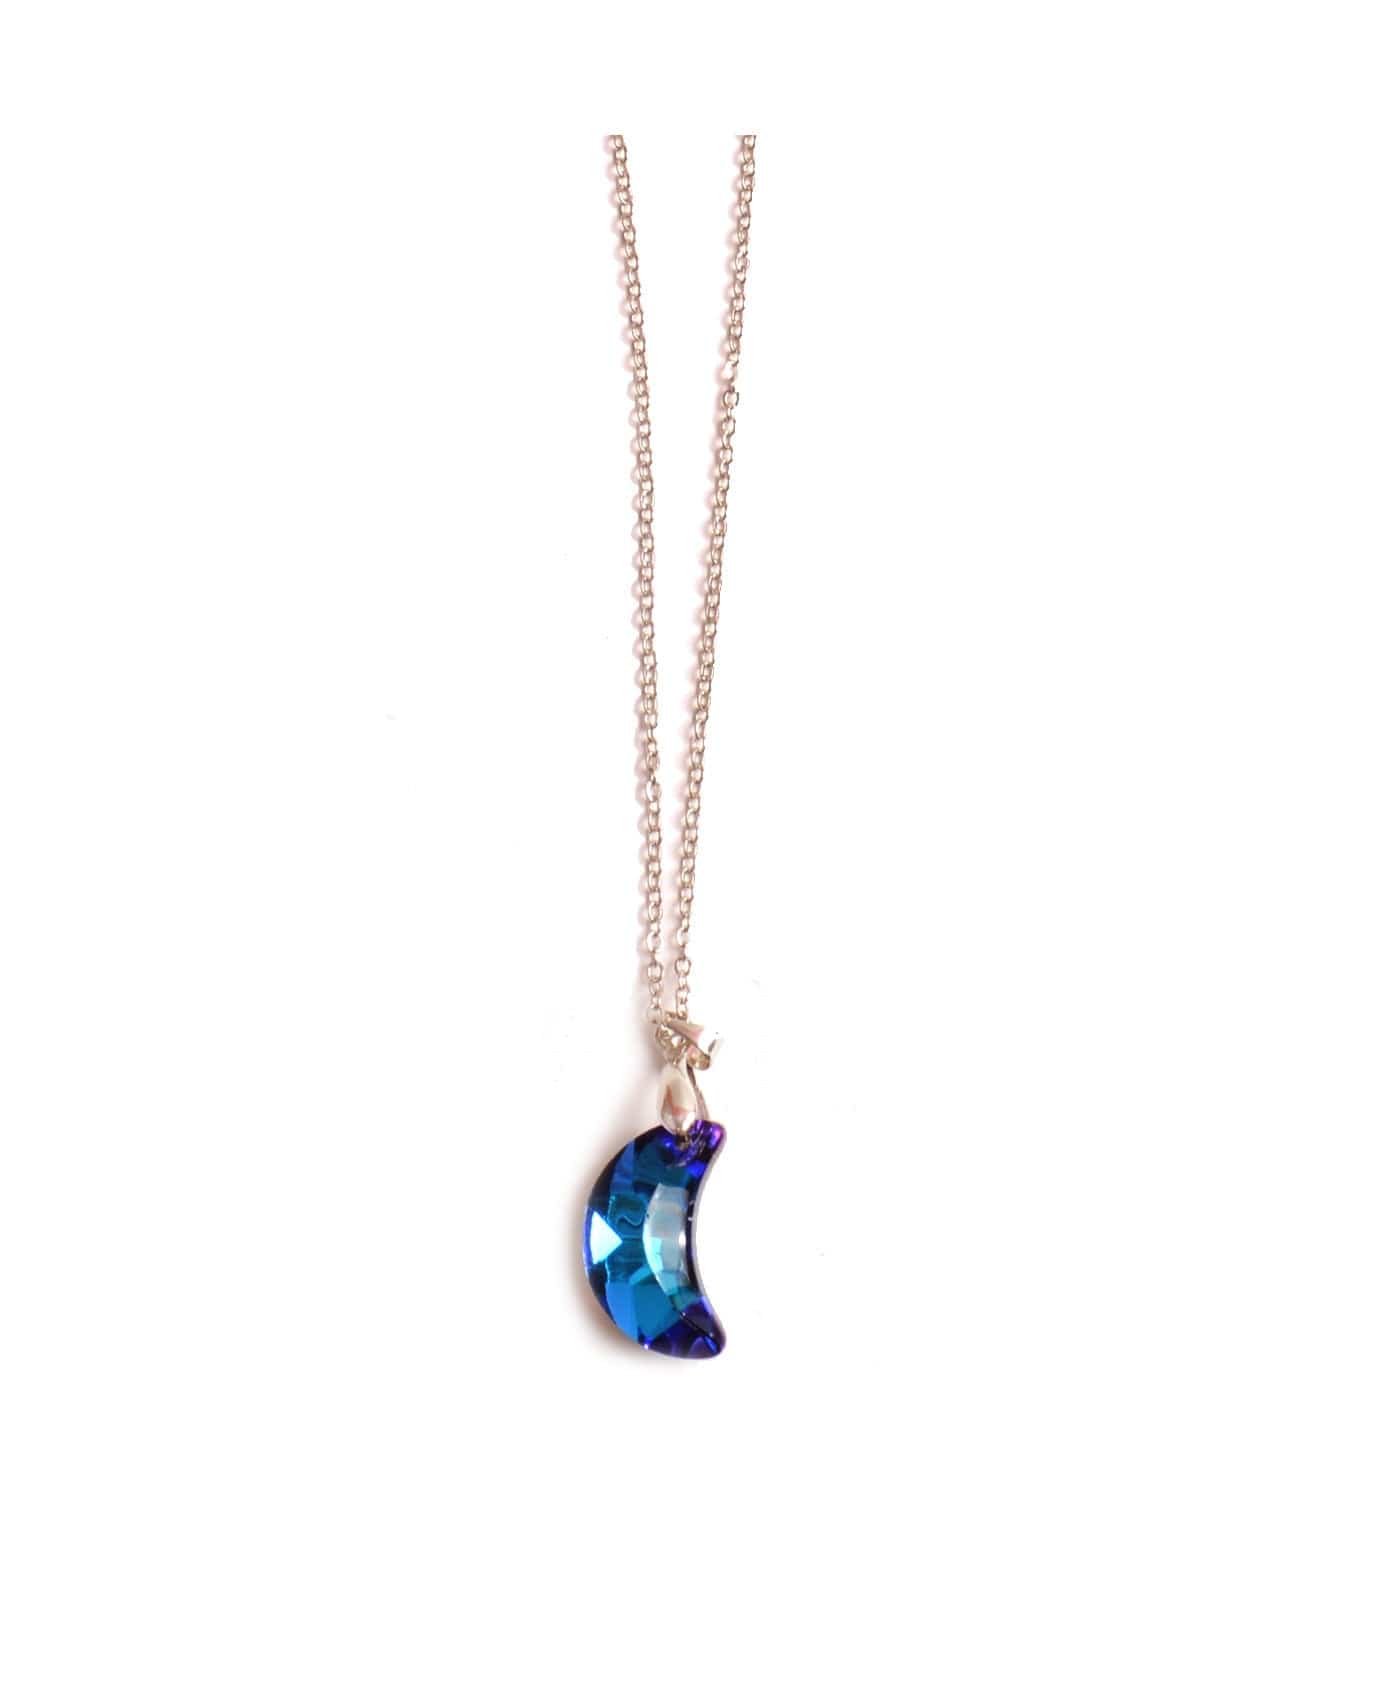 Crescent Moon Swarovski Crystal Necklace - Luke Adams Glass Blowing Studio